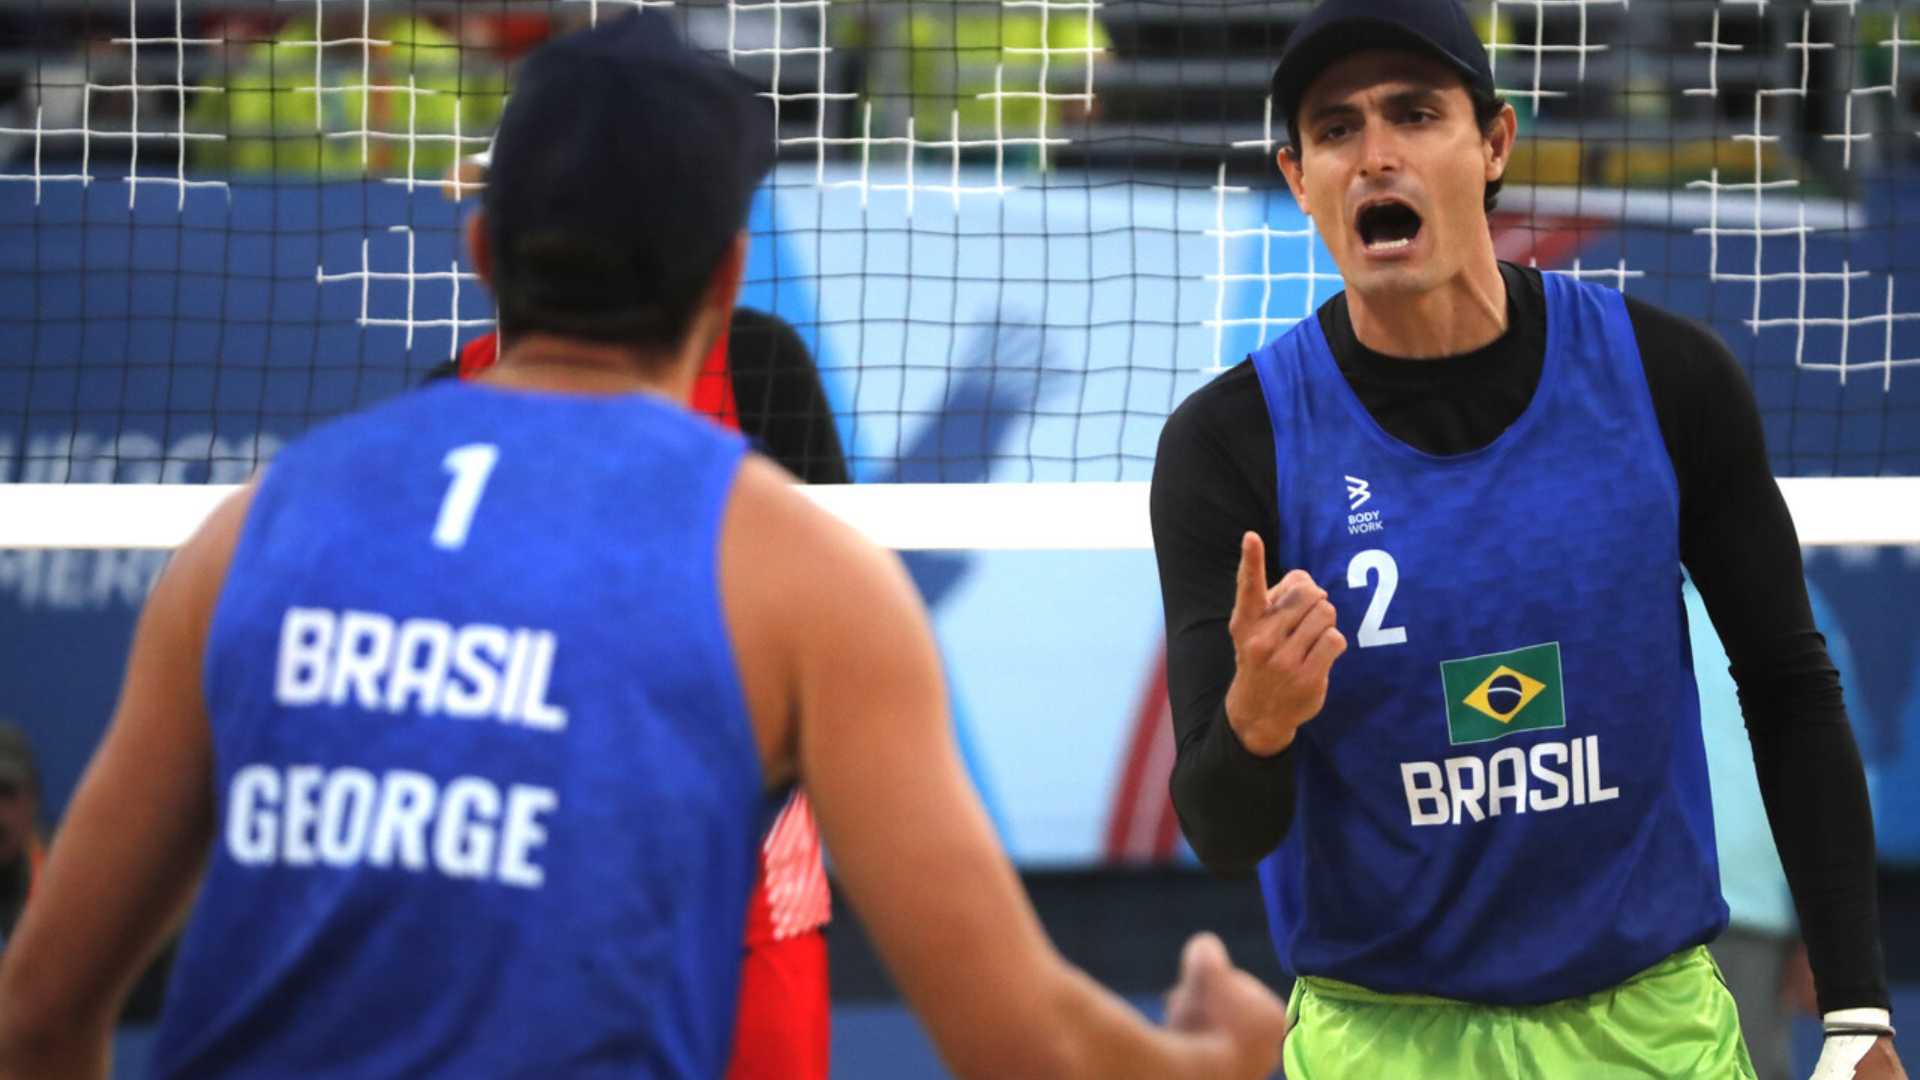 Brazil also celebrates in male's beach volleyball